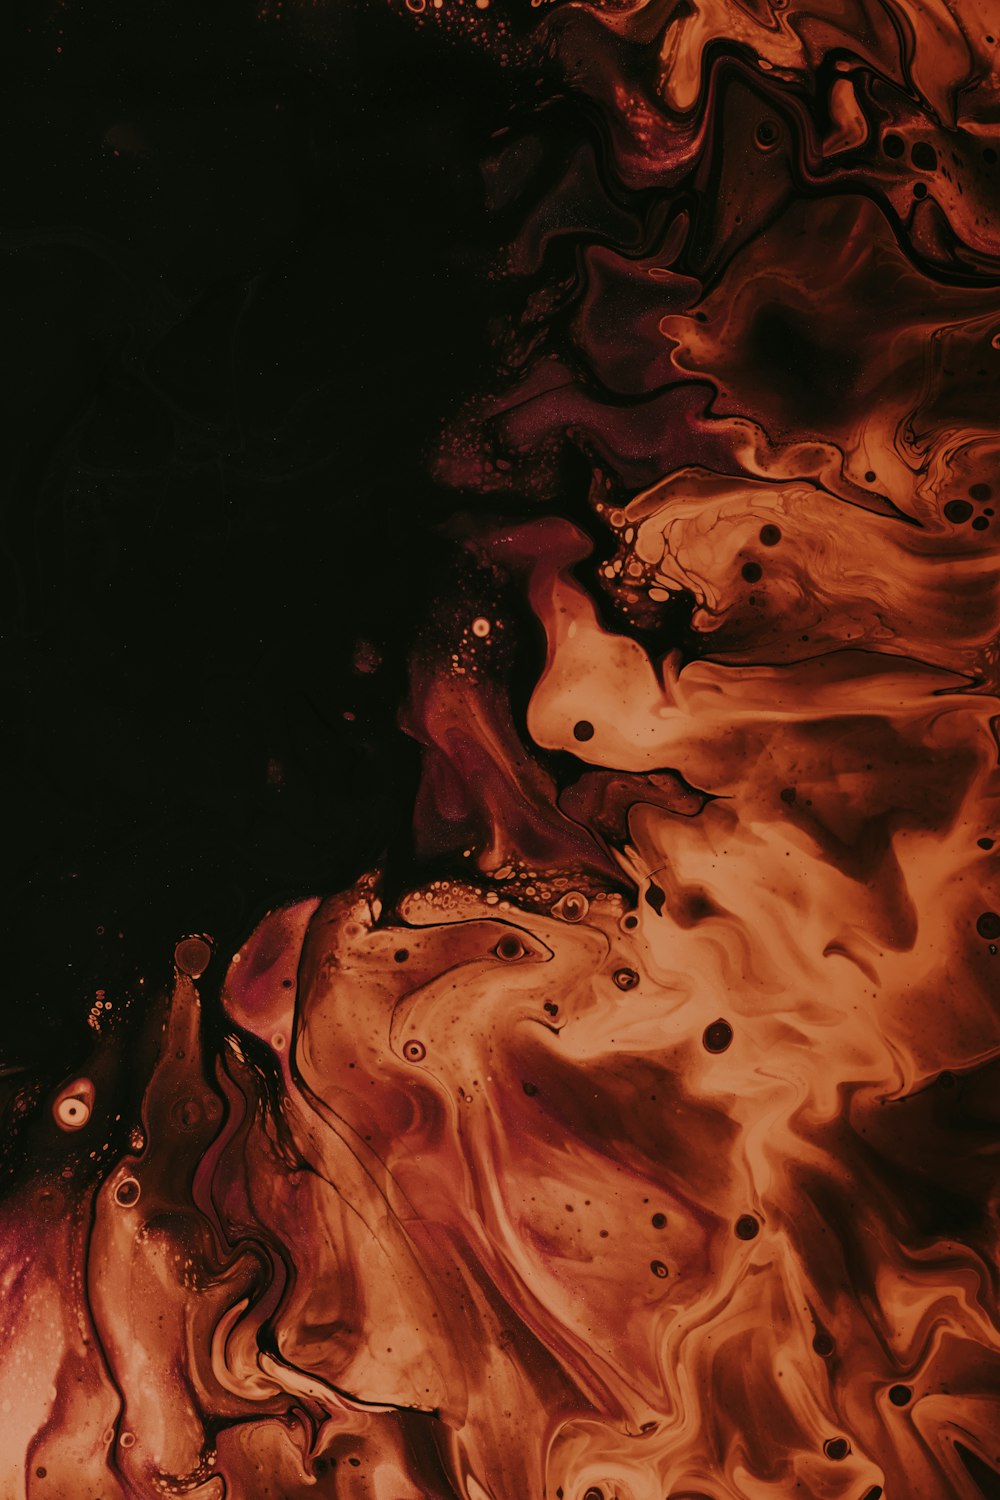 abstract fire wallpaper